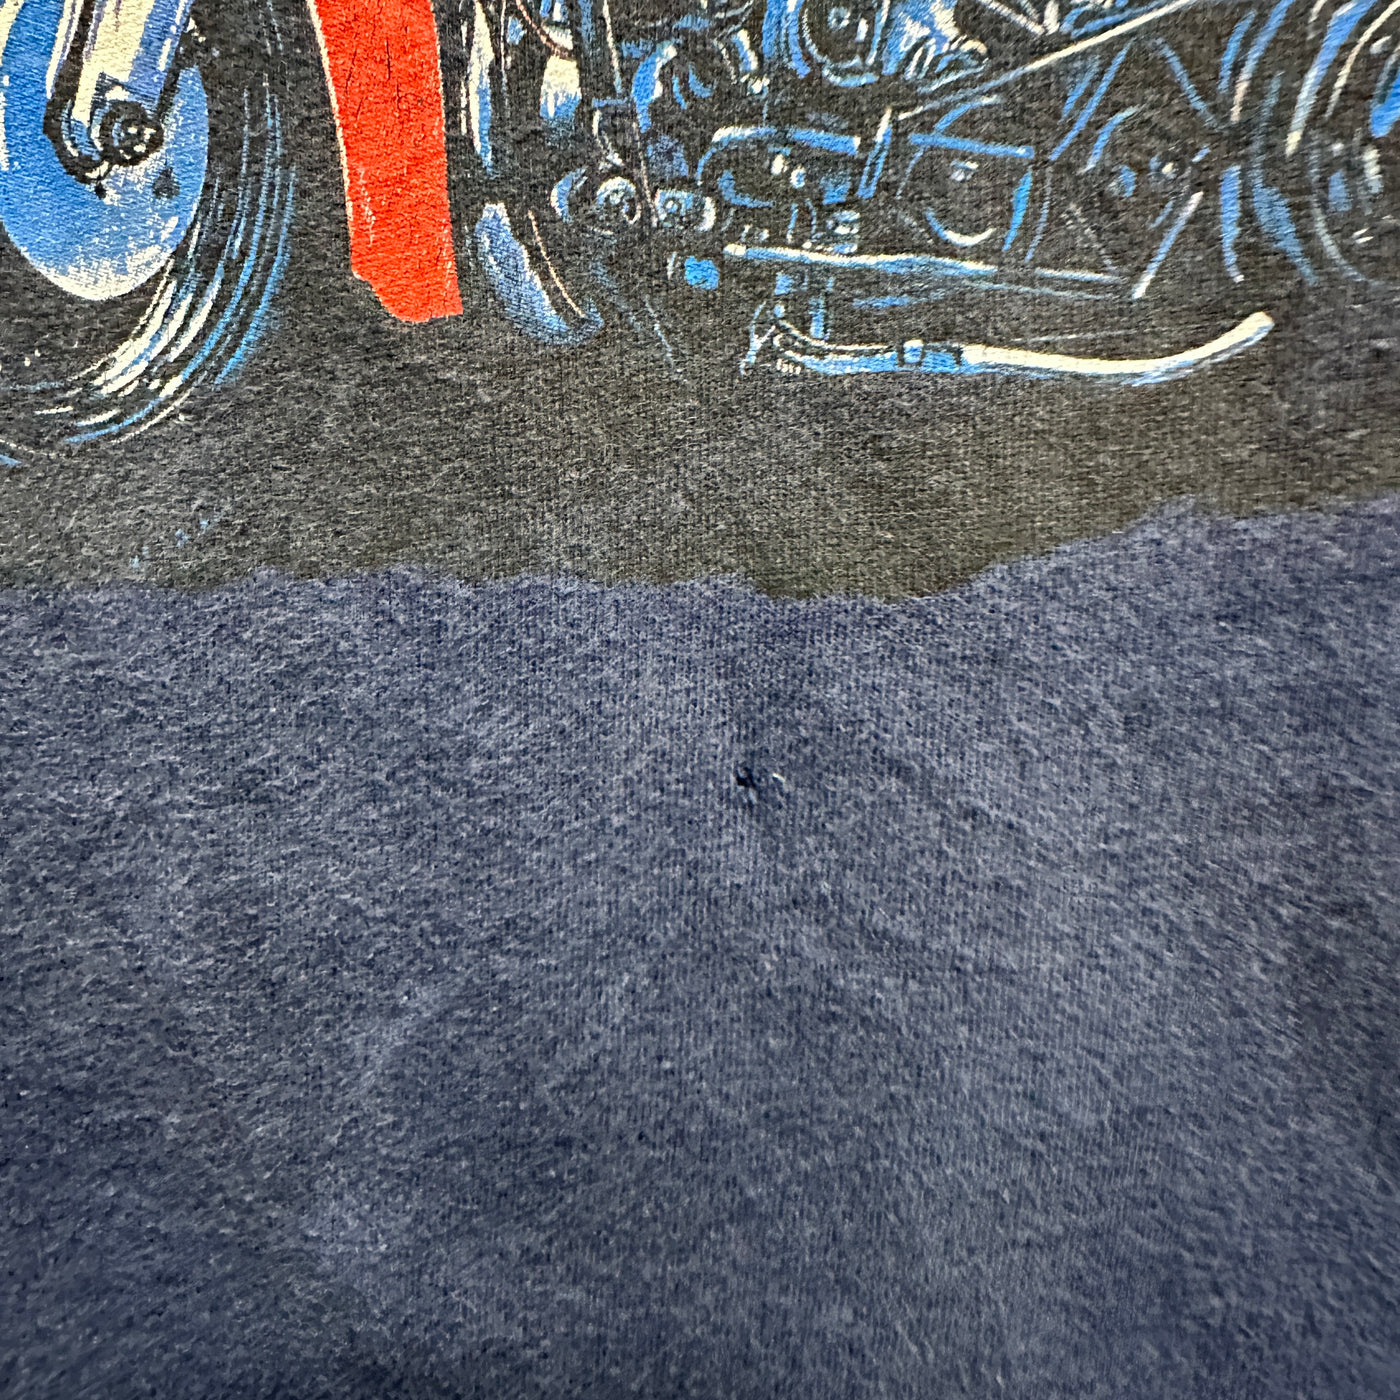 '99 Night Rider Blue Harley Davidson T-shirt sz L